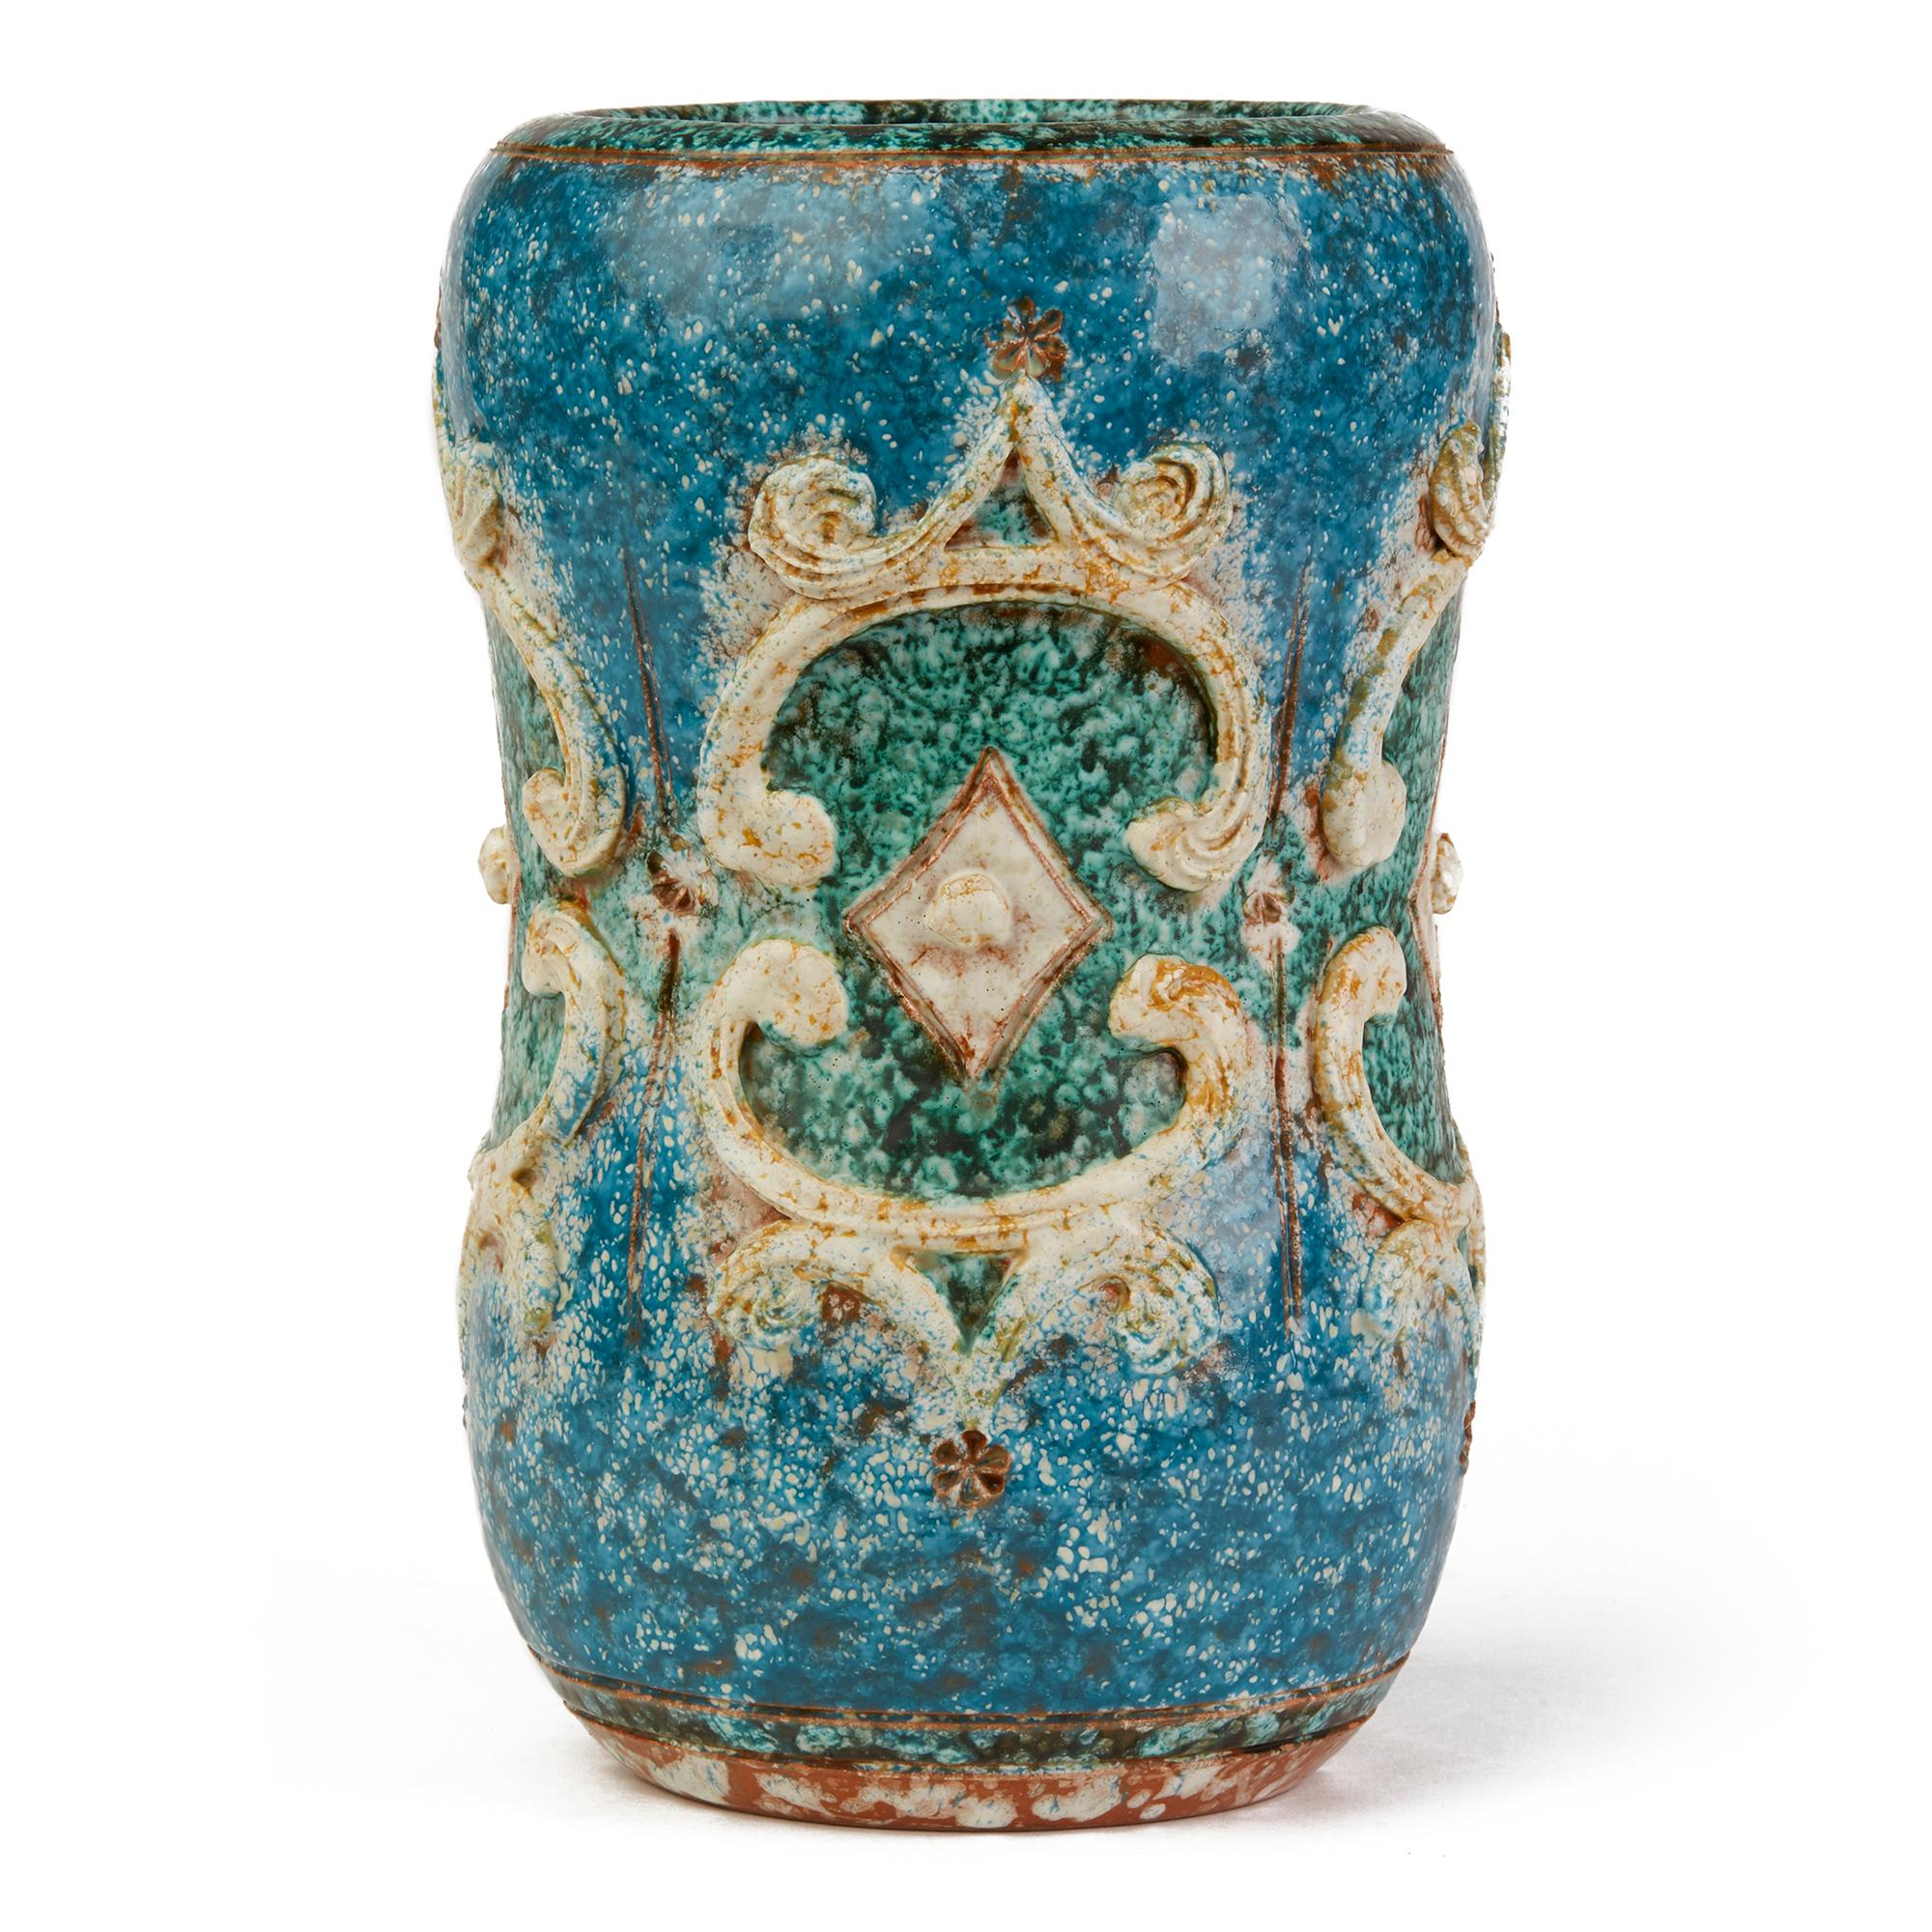 Alvino Bagni Raymor Attributed Unusual Midcentury Italian Art Pottery Vase For Sale 1